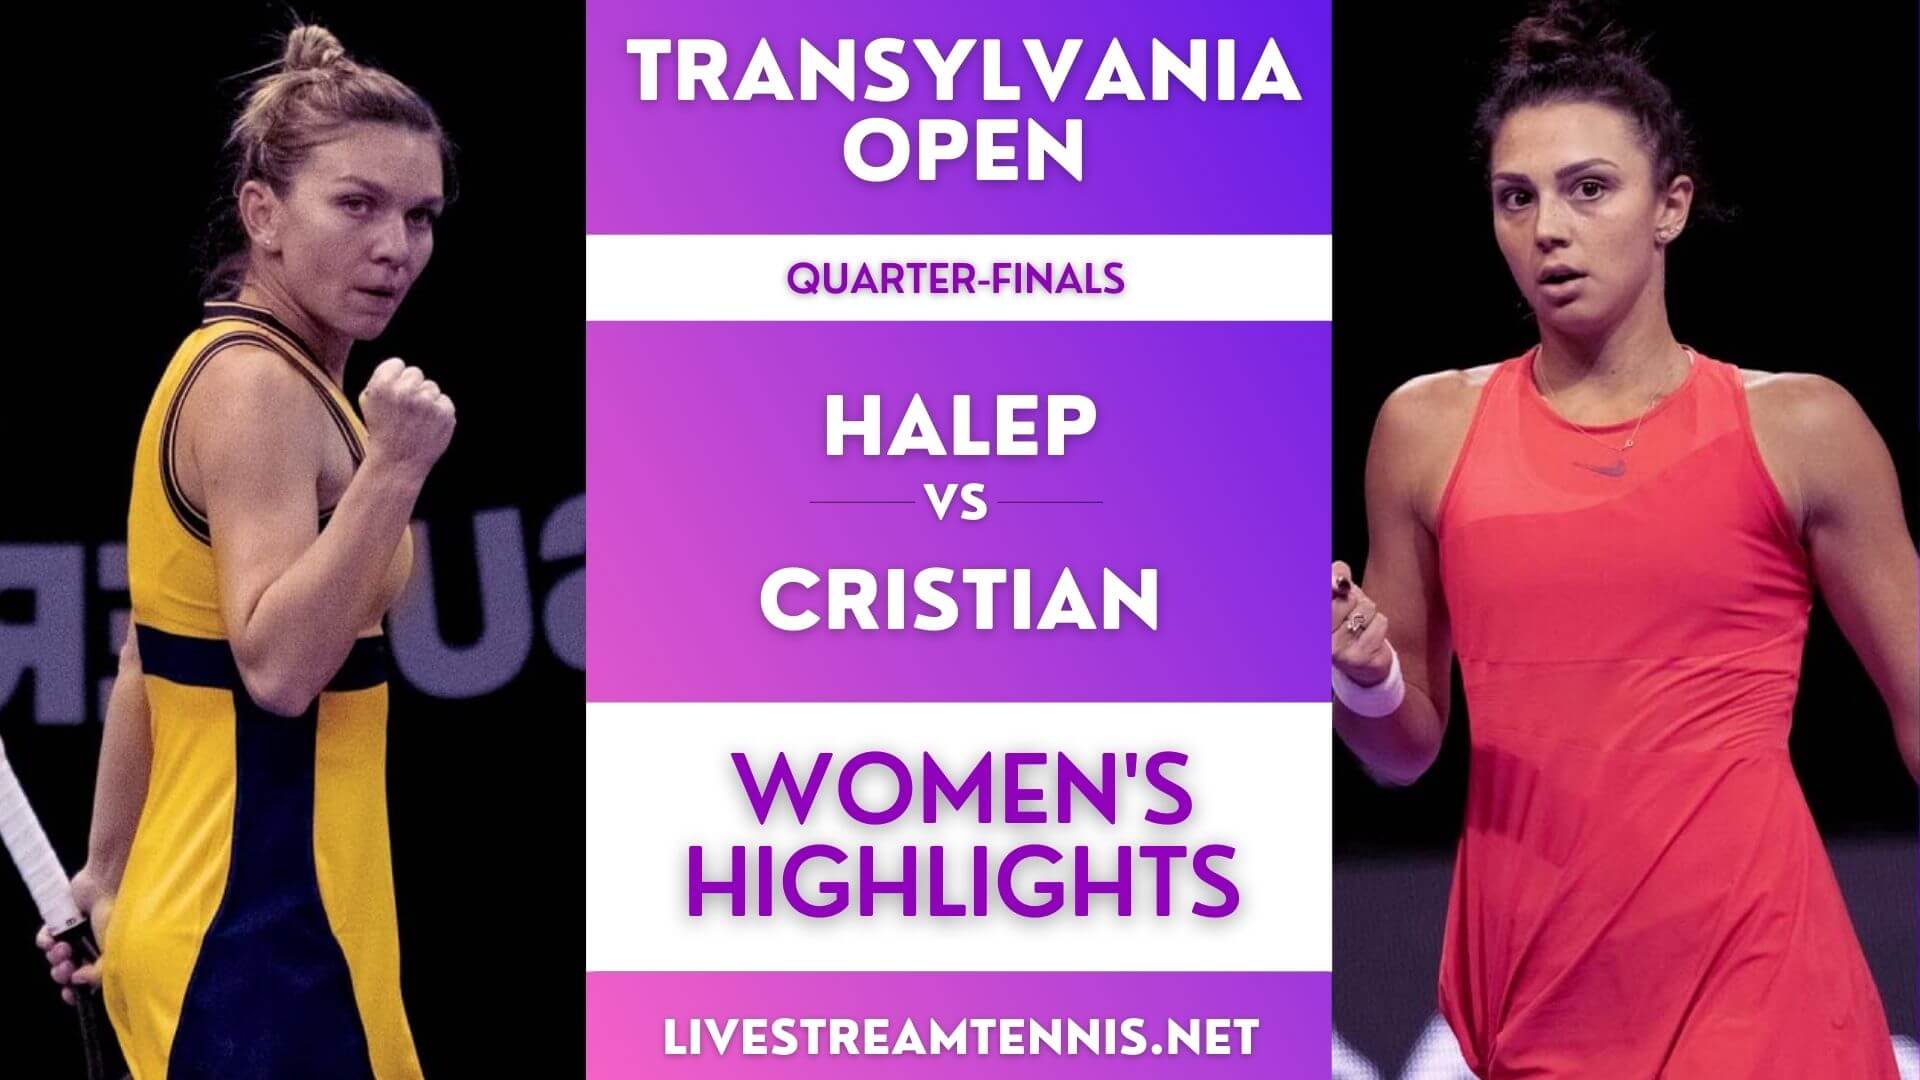 Transylvania Open WTA Quarter Final 2 Highlights 2021